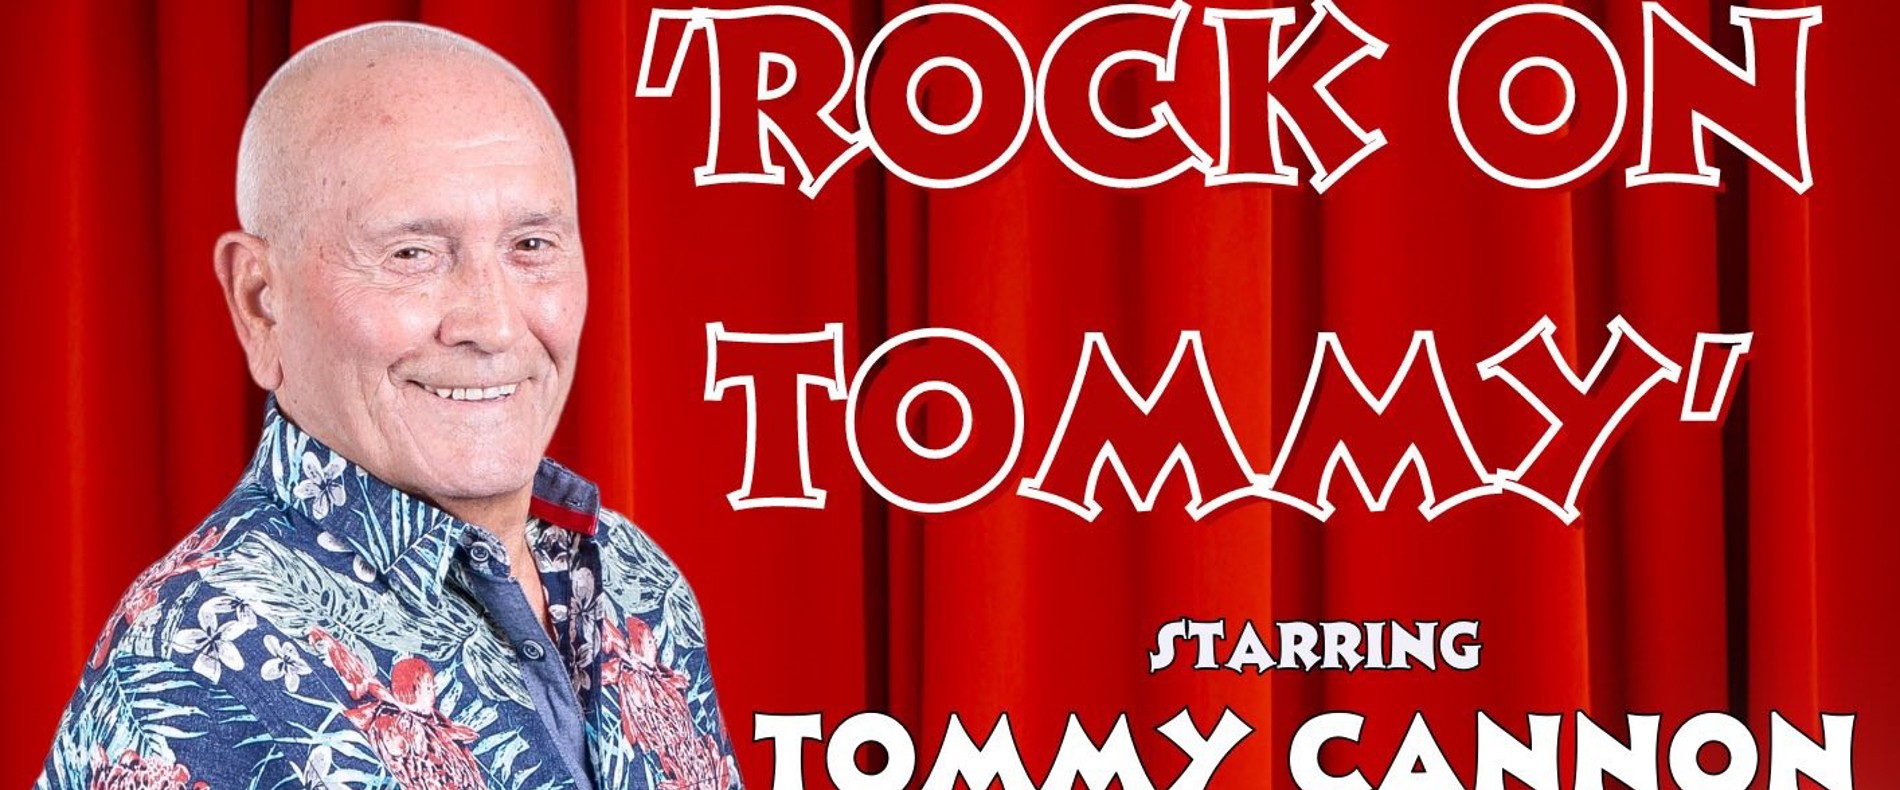 Rock On Tommy